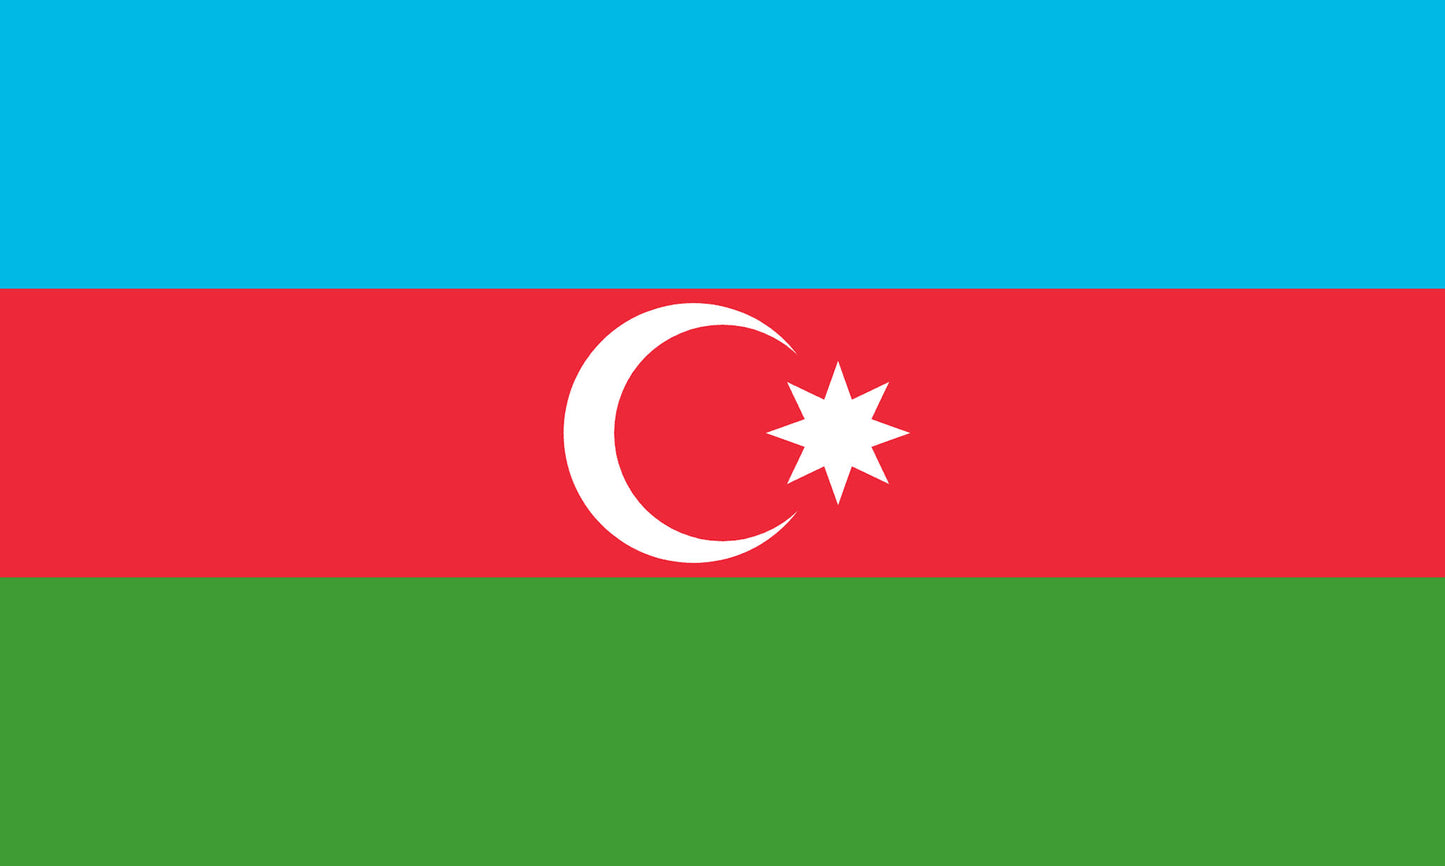 UF-AZR-150x90 - государственный флаг Республики Азербайджан